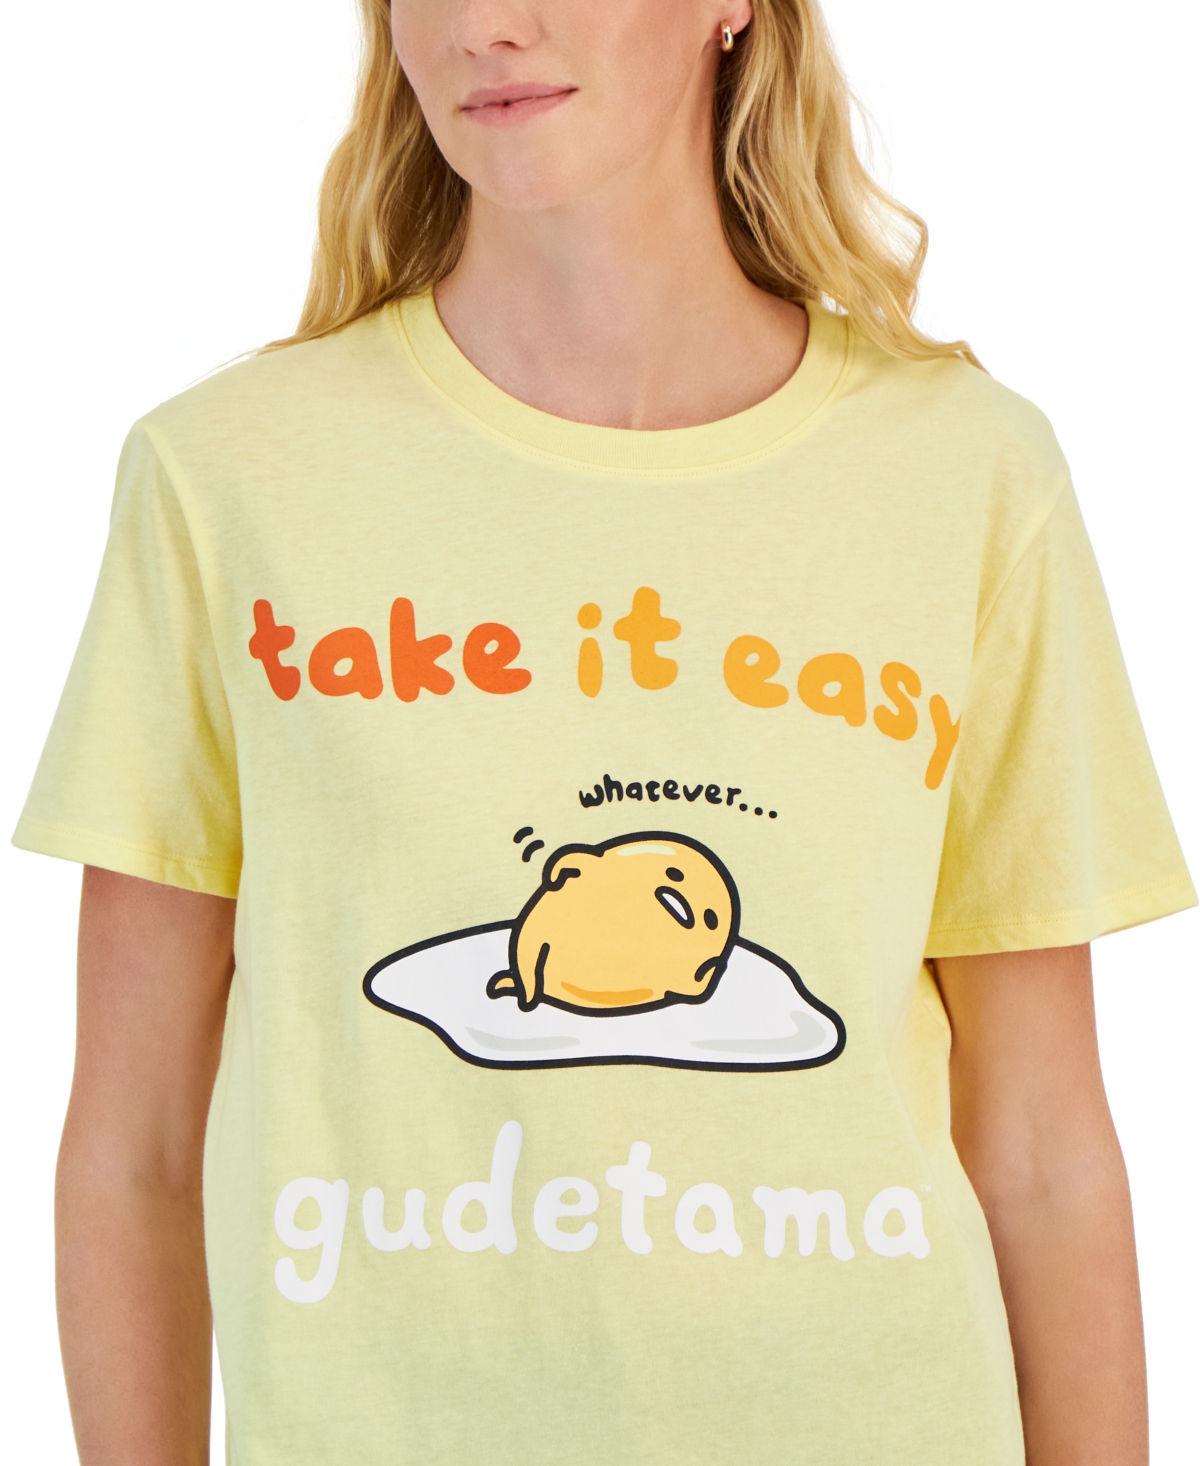 Shop Love Tribe Juniors' Take It Easy Gudetama Graphic Tee In Pale Banana